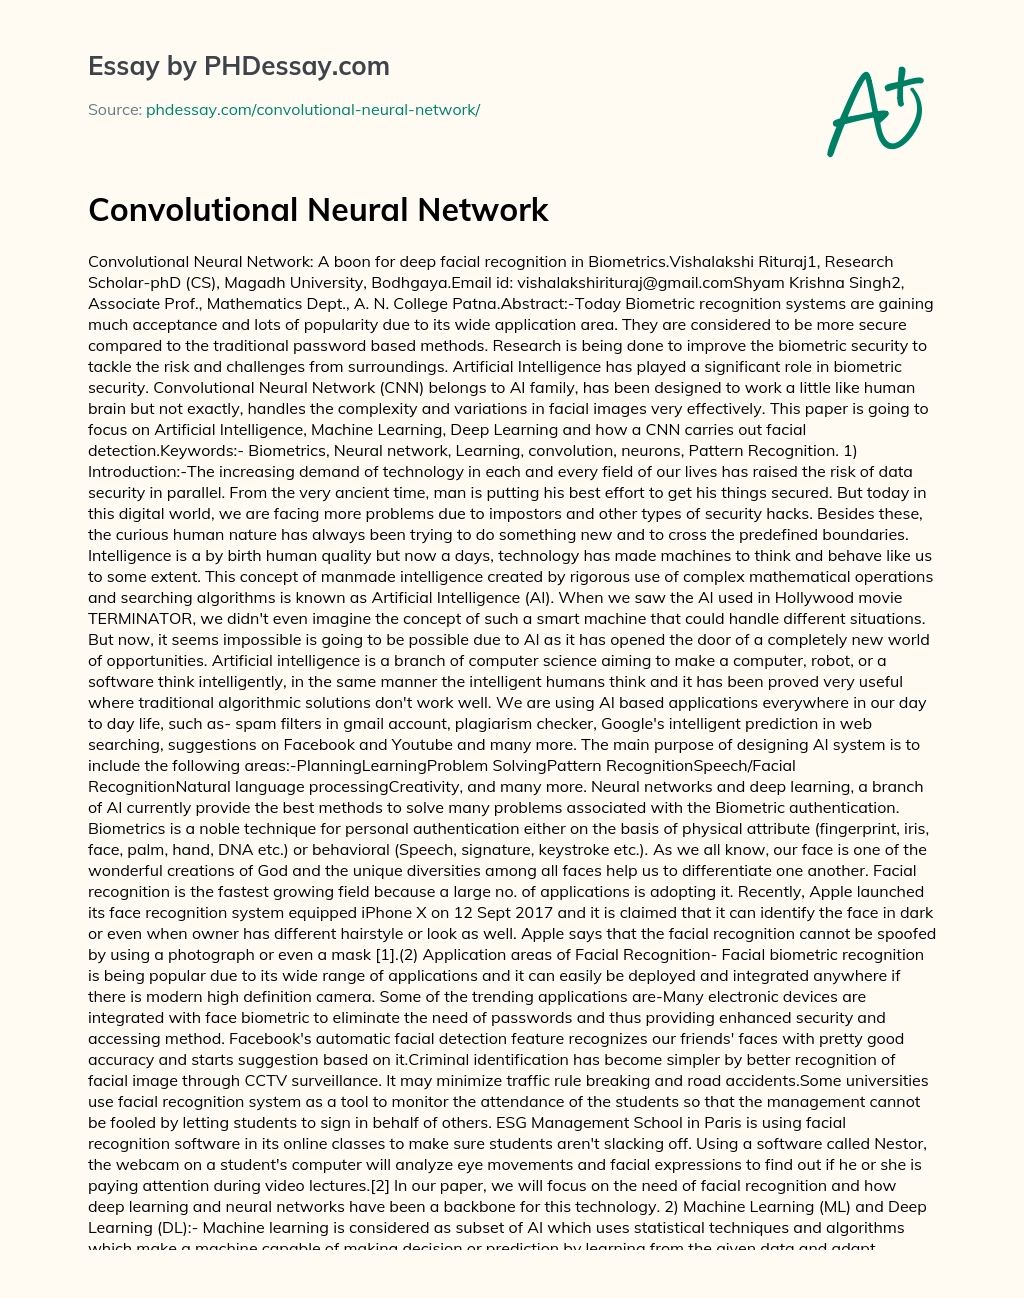 Convolutional Neural Network essay